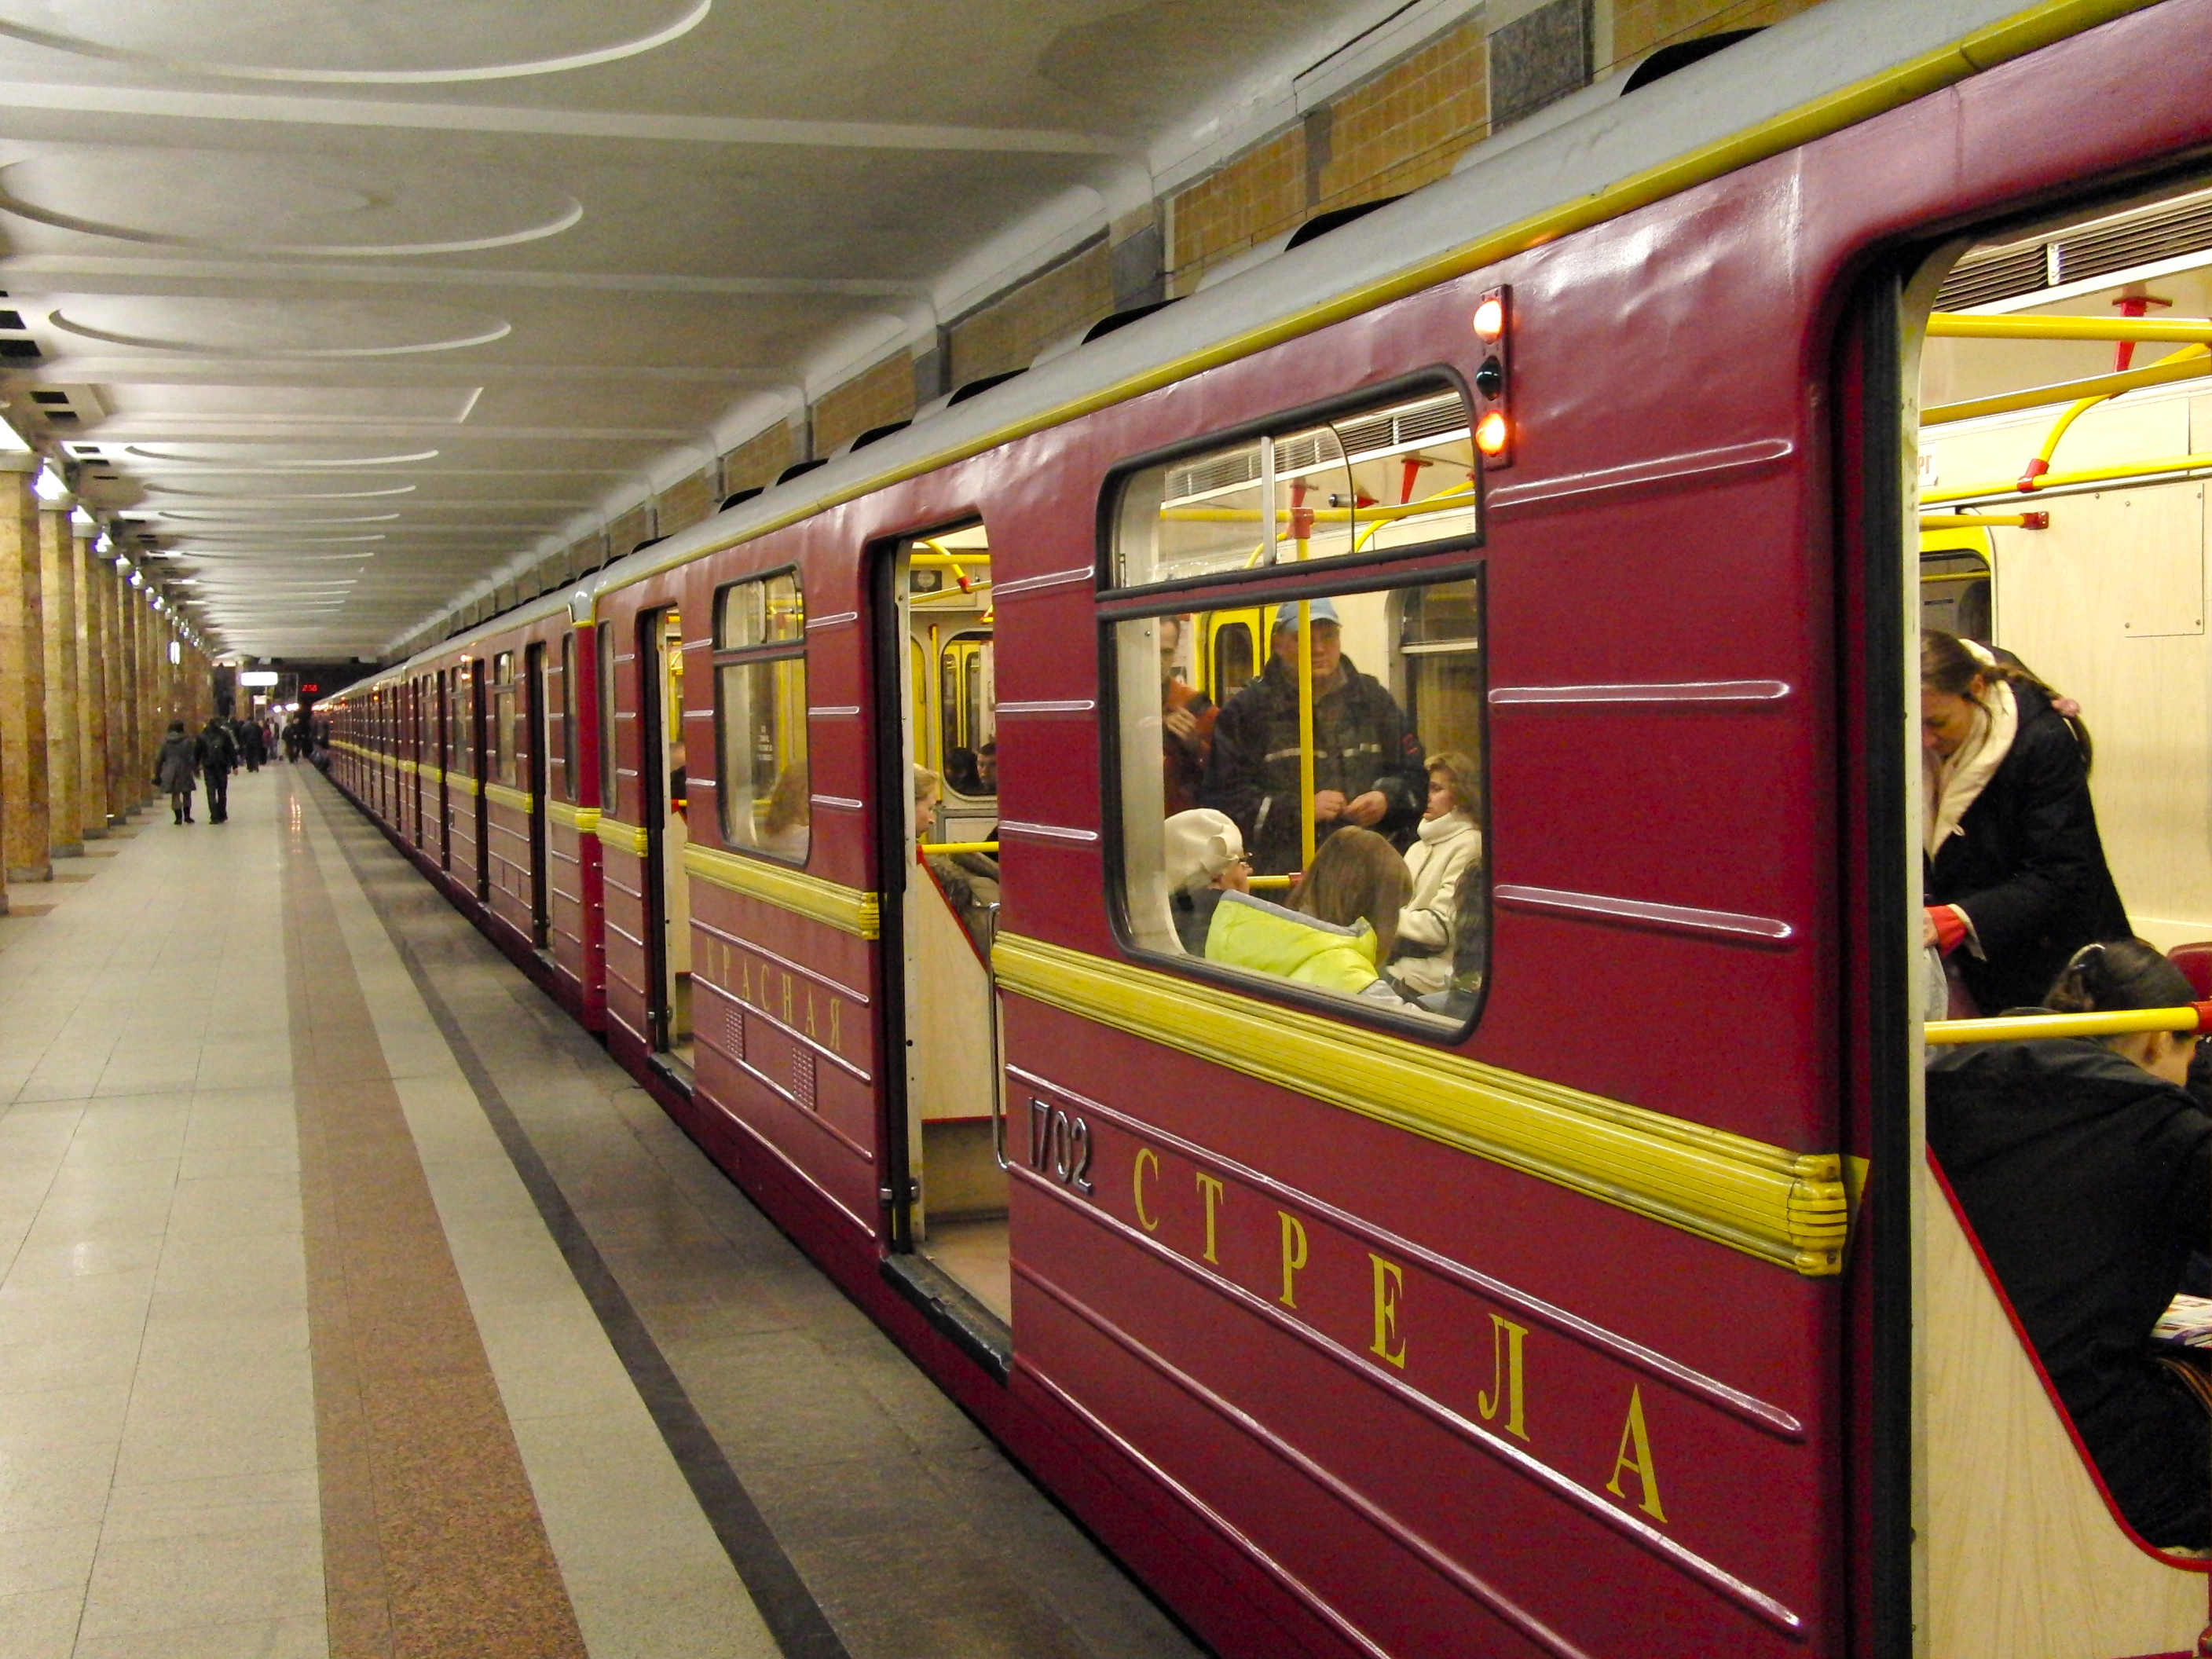 File:Krasnaya strela (Red arrow) at Krasnoselskaya station (Метропоезд Красная стрела на станции Красносельская) (5234701298).jpg - Wikimedia